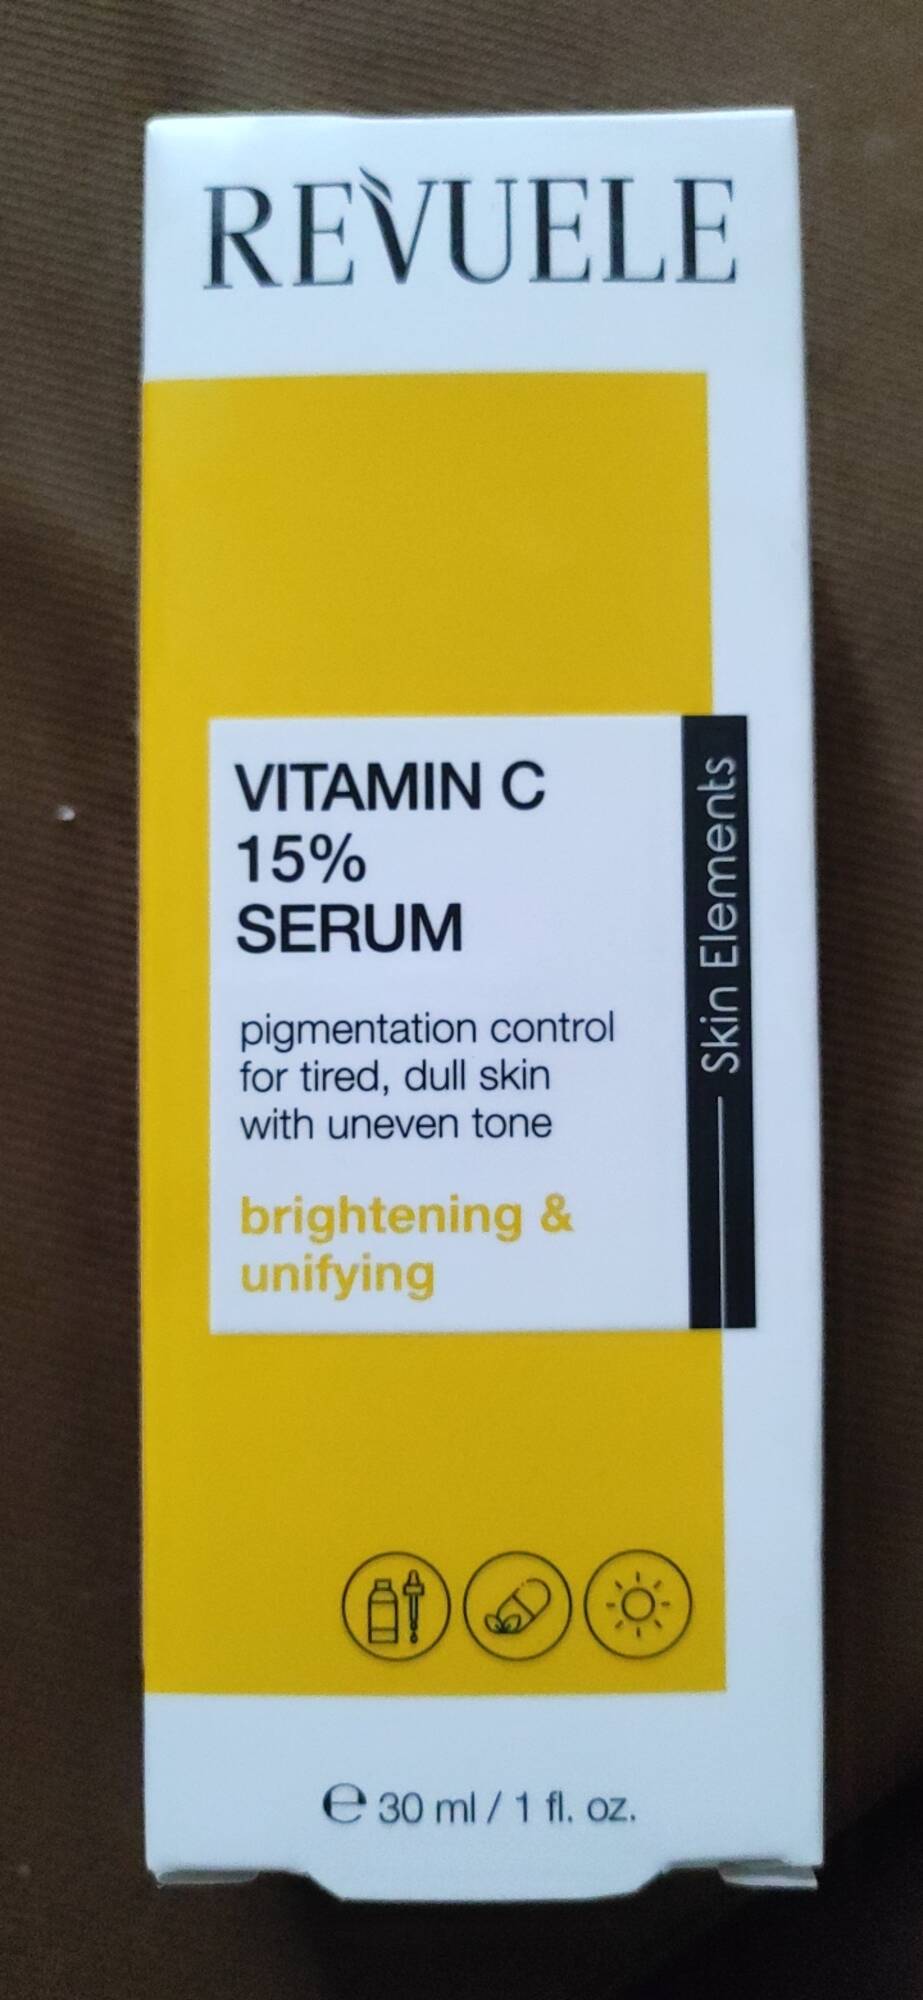 REVUELE - Vitamin C 15% serum